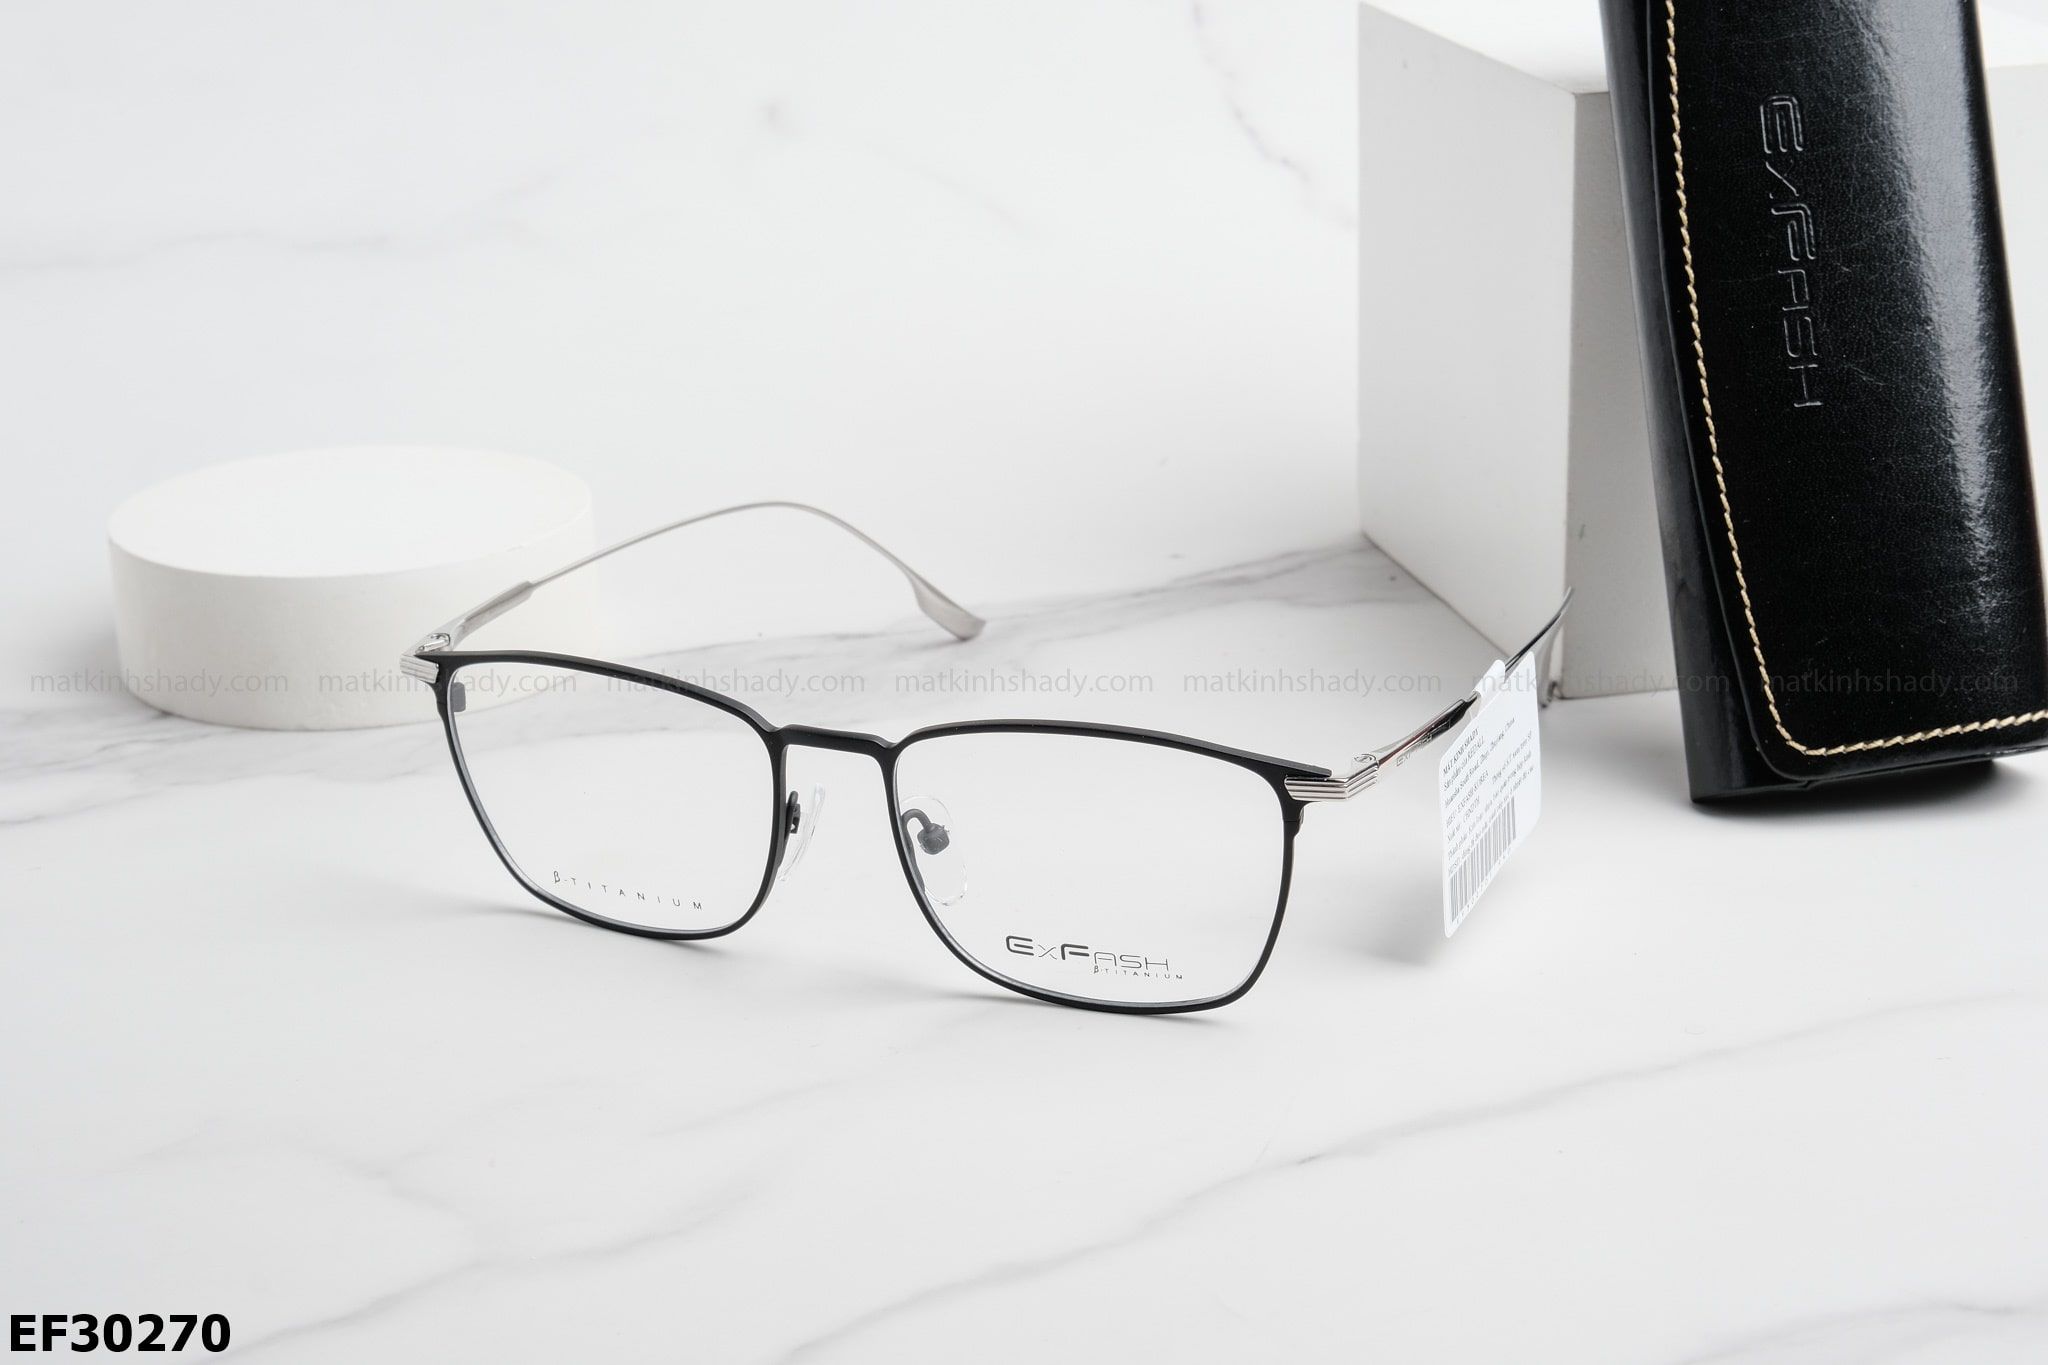  Exfash Eyewear - Glasses - EF30270 